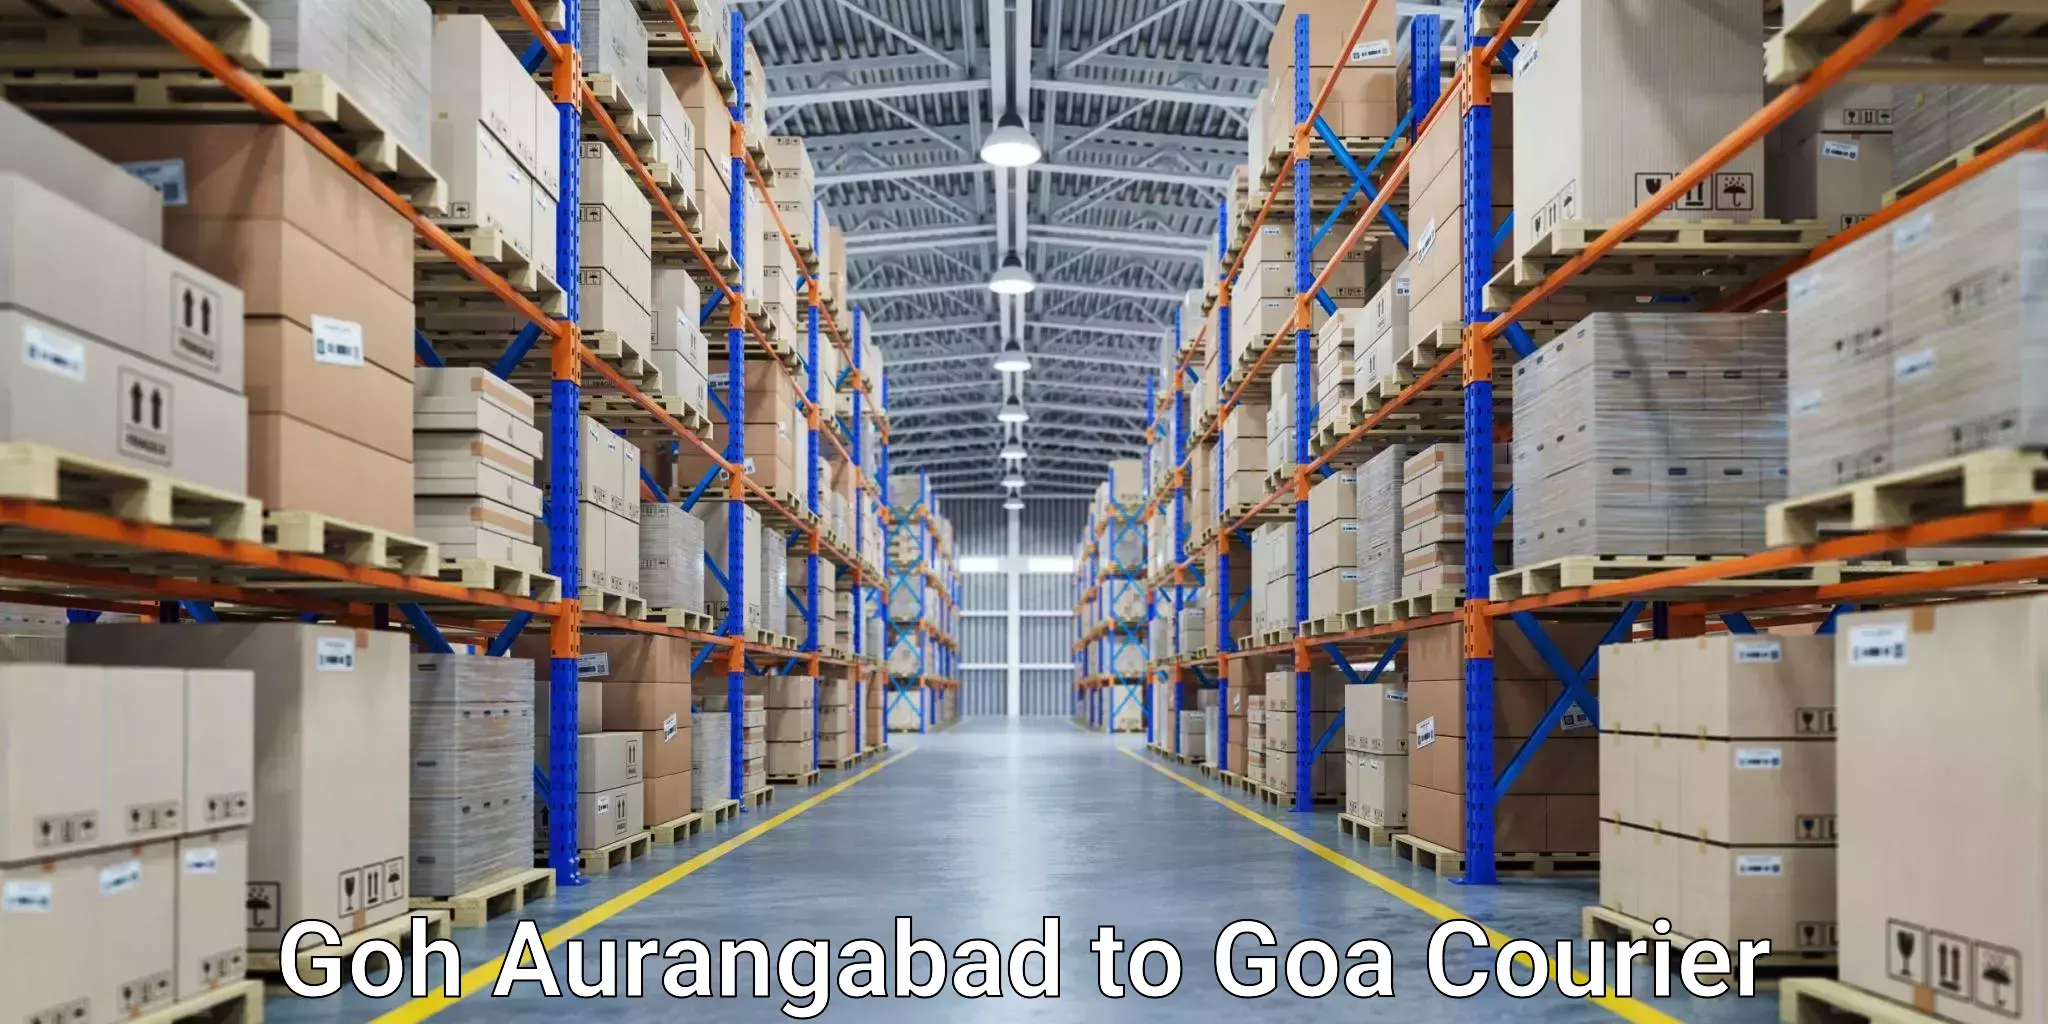 Same-day delivery options Goh Aurangabad to Bardez